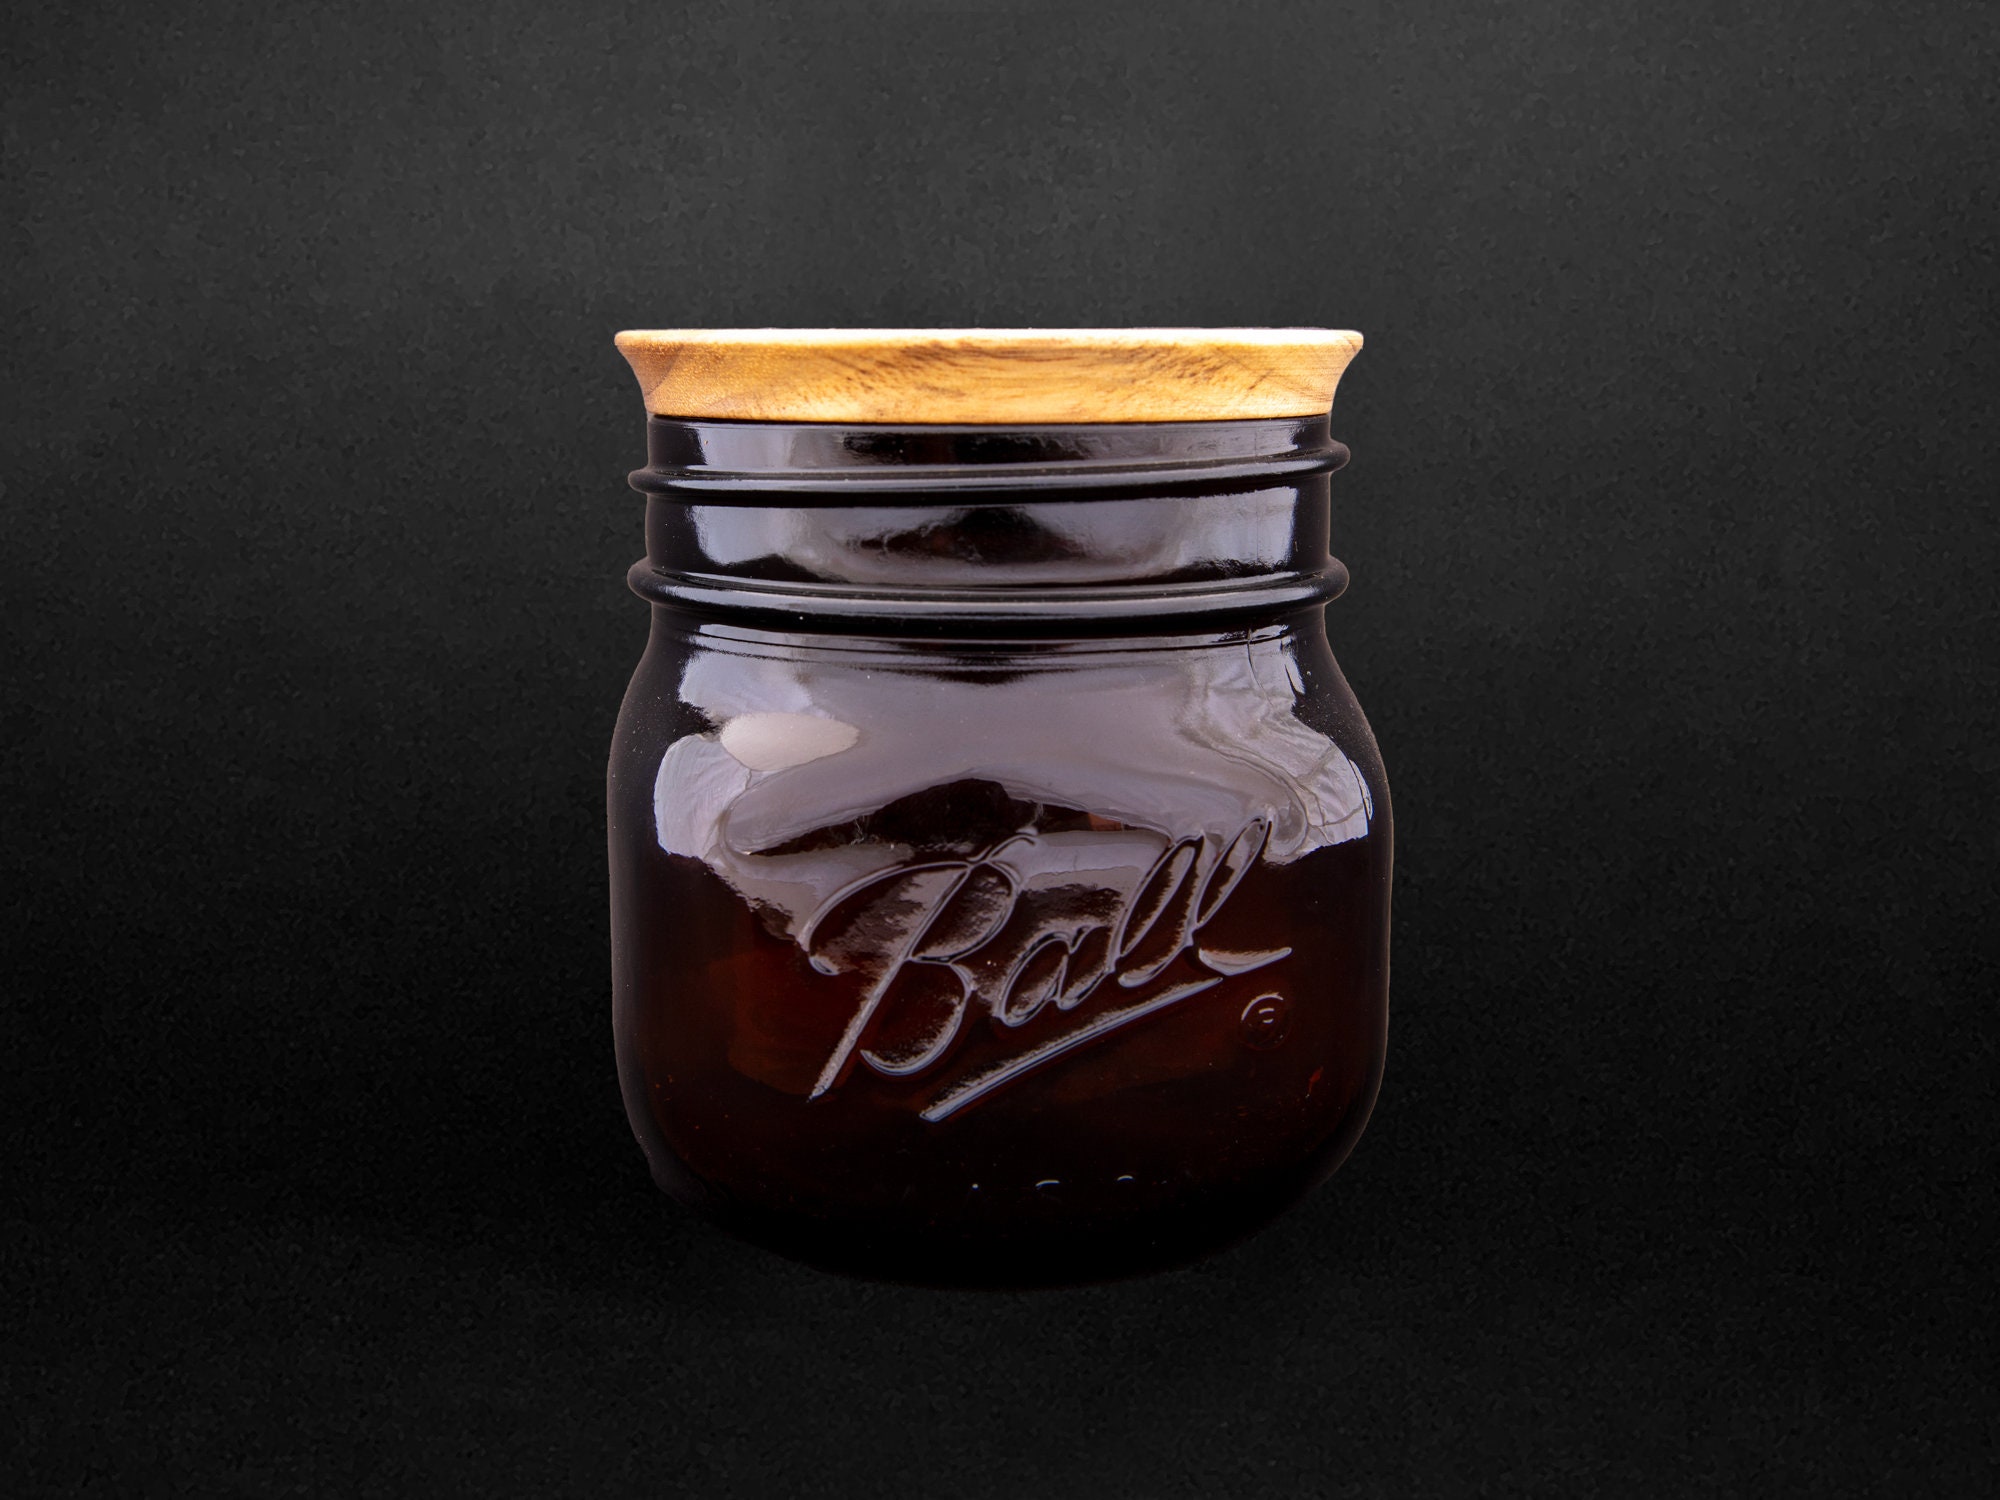 4pk. 16oz. Ball mason jars canning jars with lids